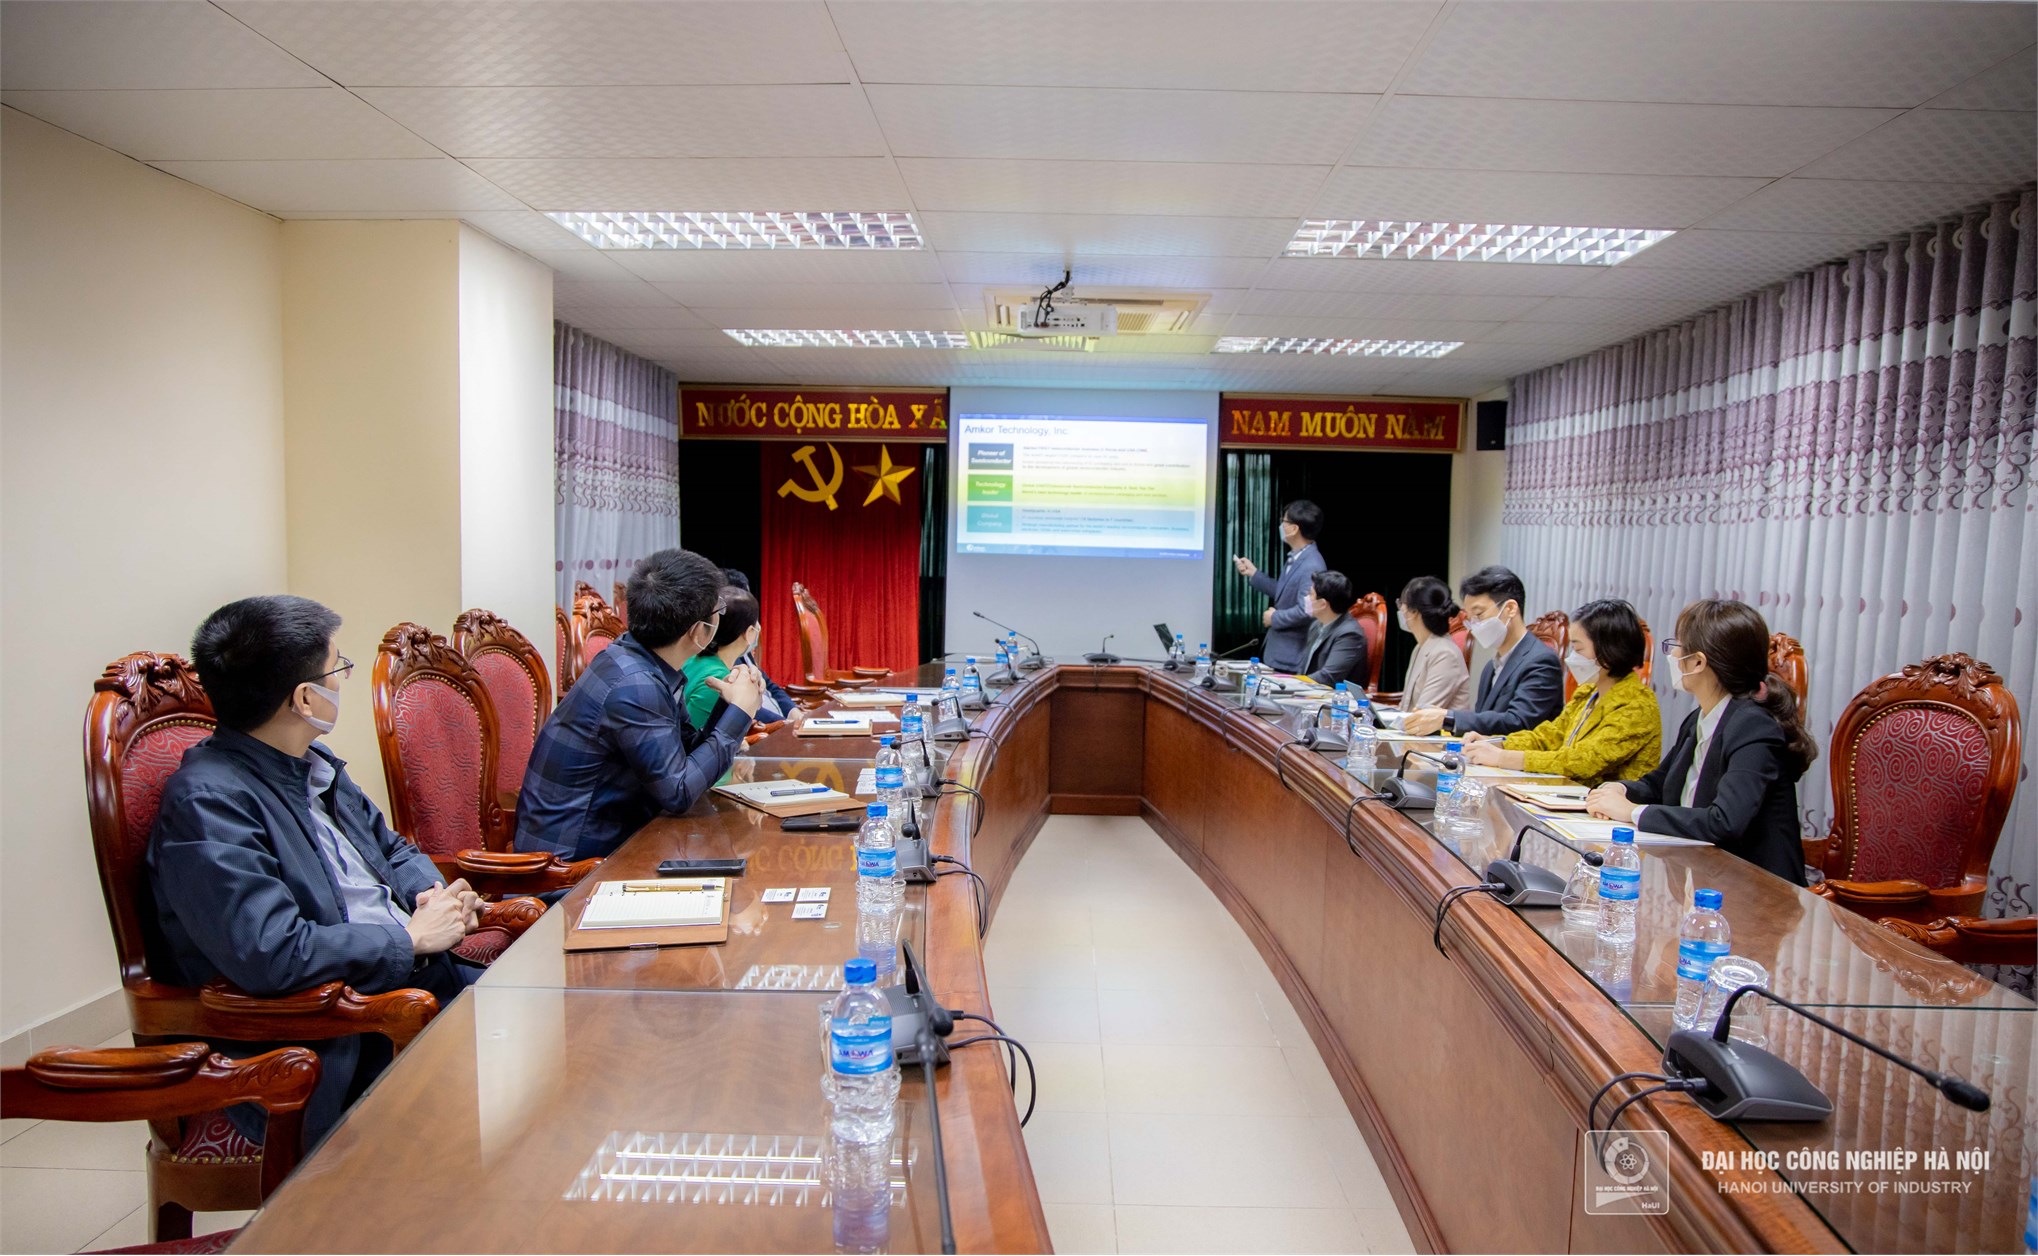 Hanoi University of Industry received Amkor Technology Vietnam